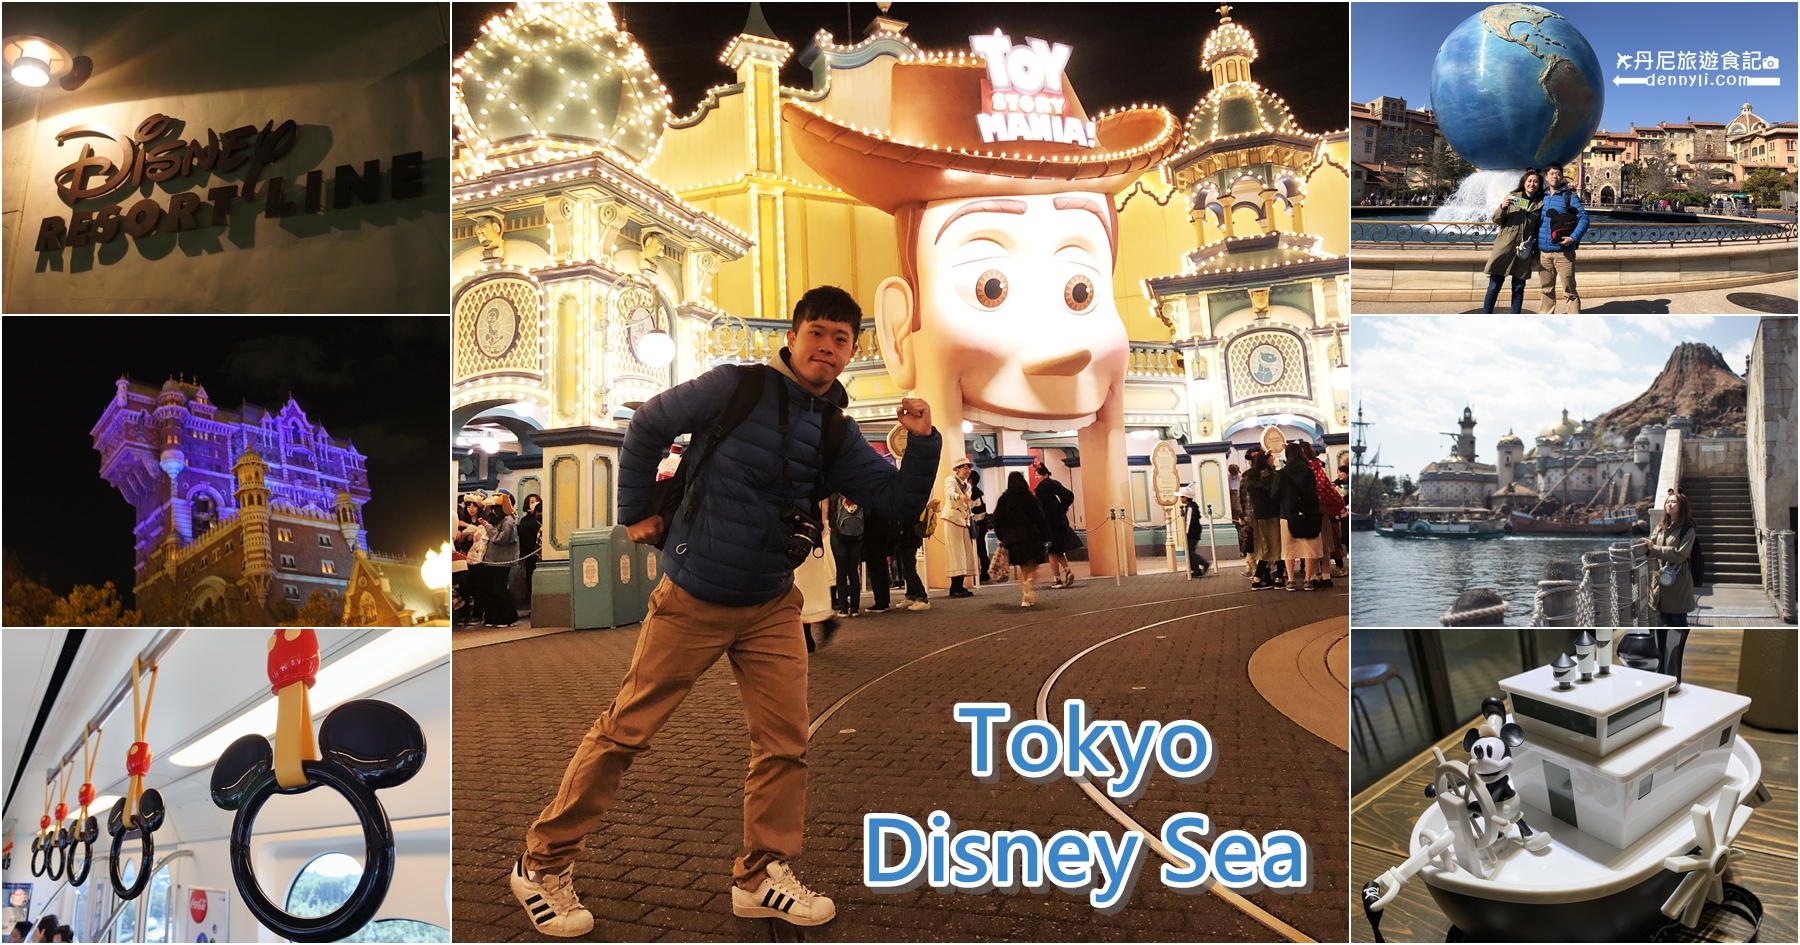 Tokyo Disney sea